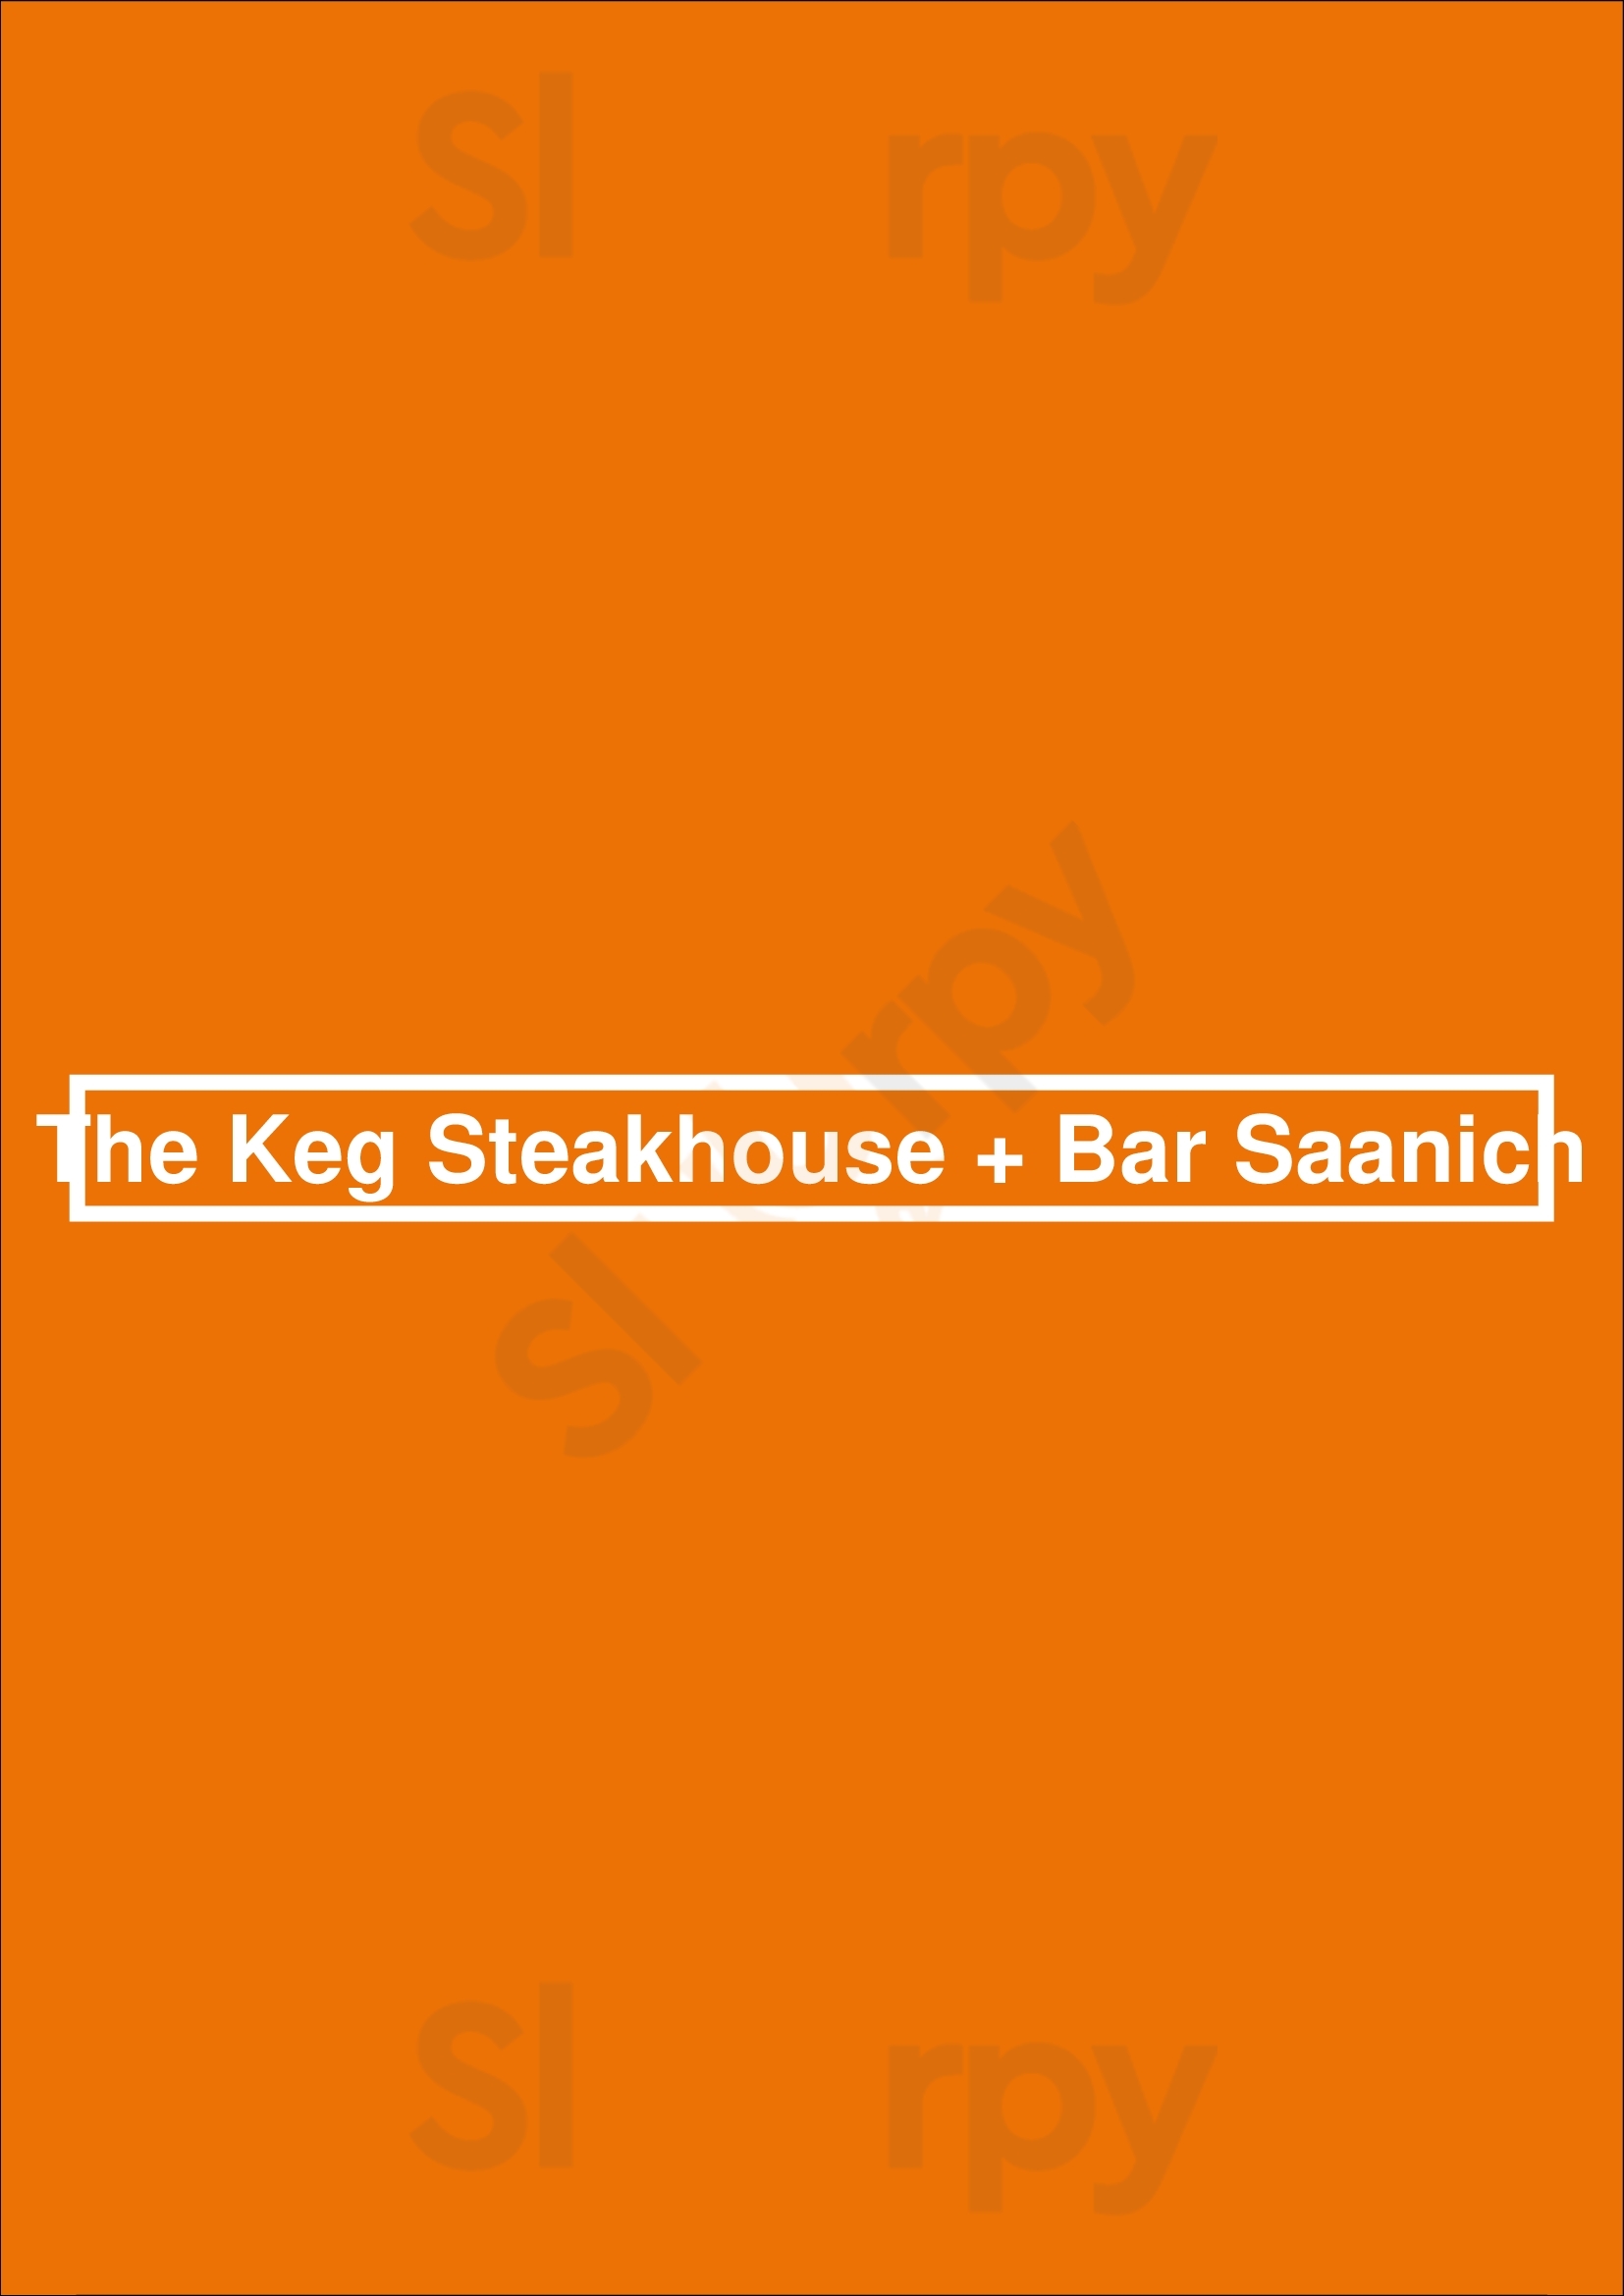 The Keg Steakhouse + Bar - Saanich Victoria Menu - 1